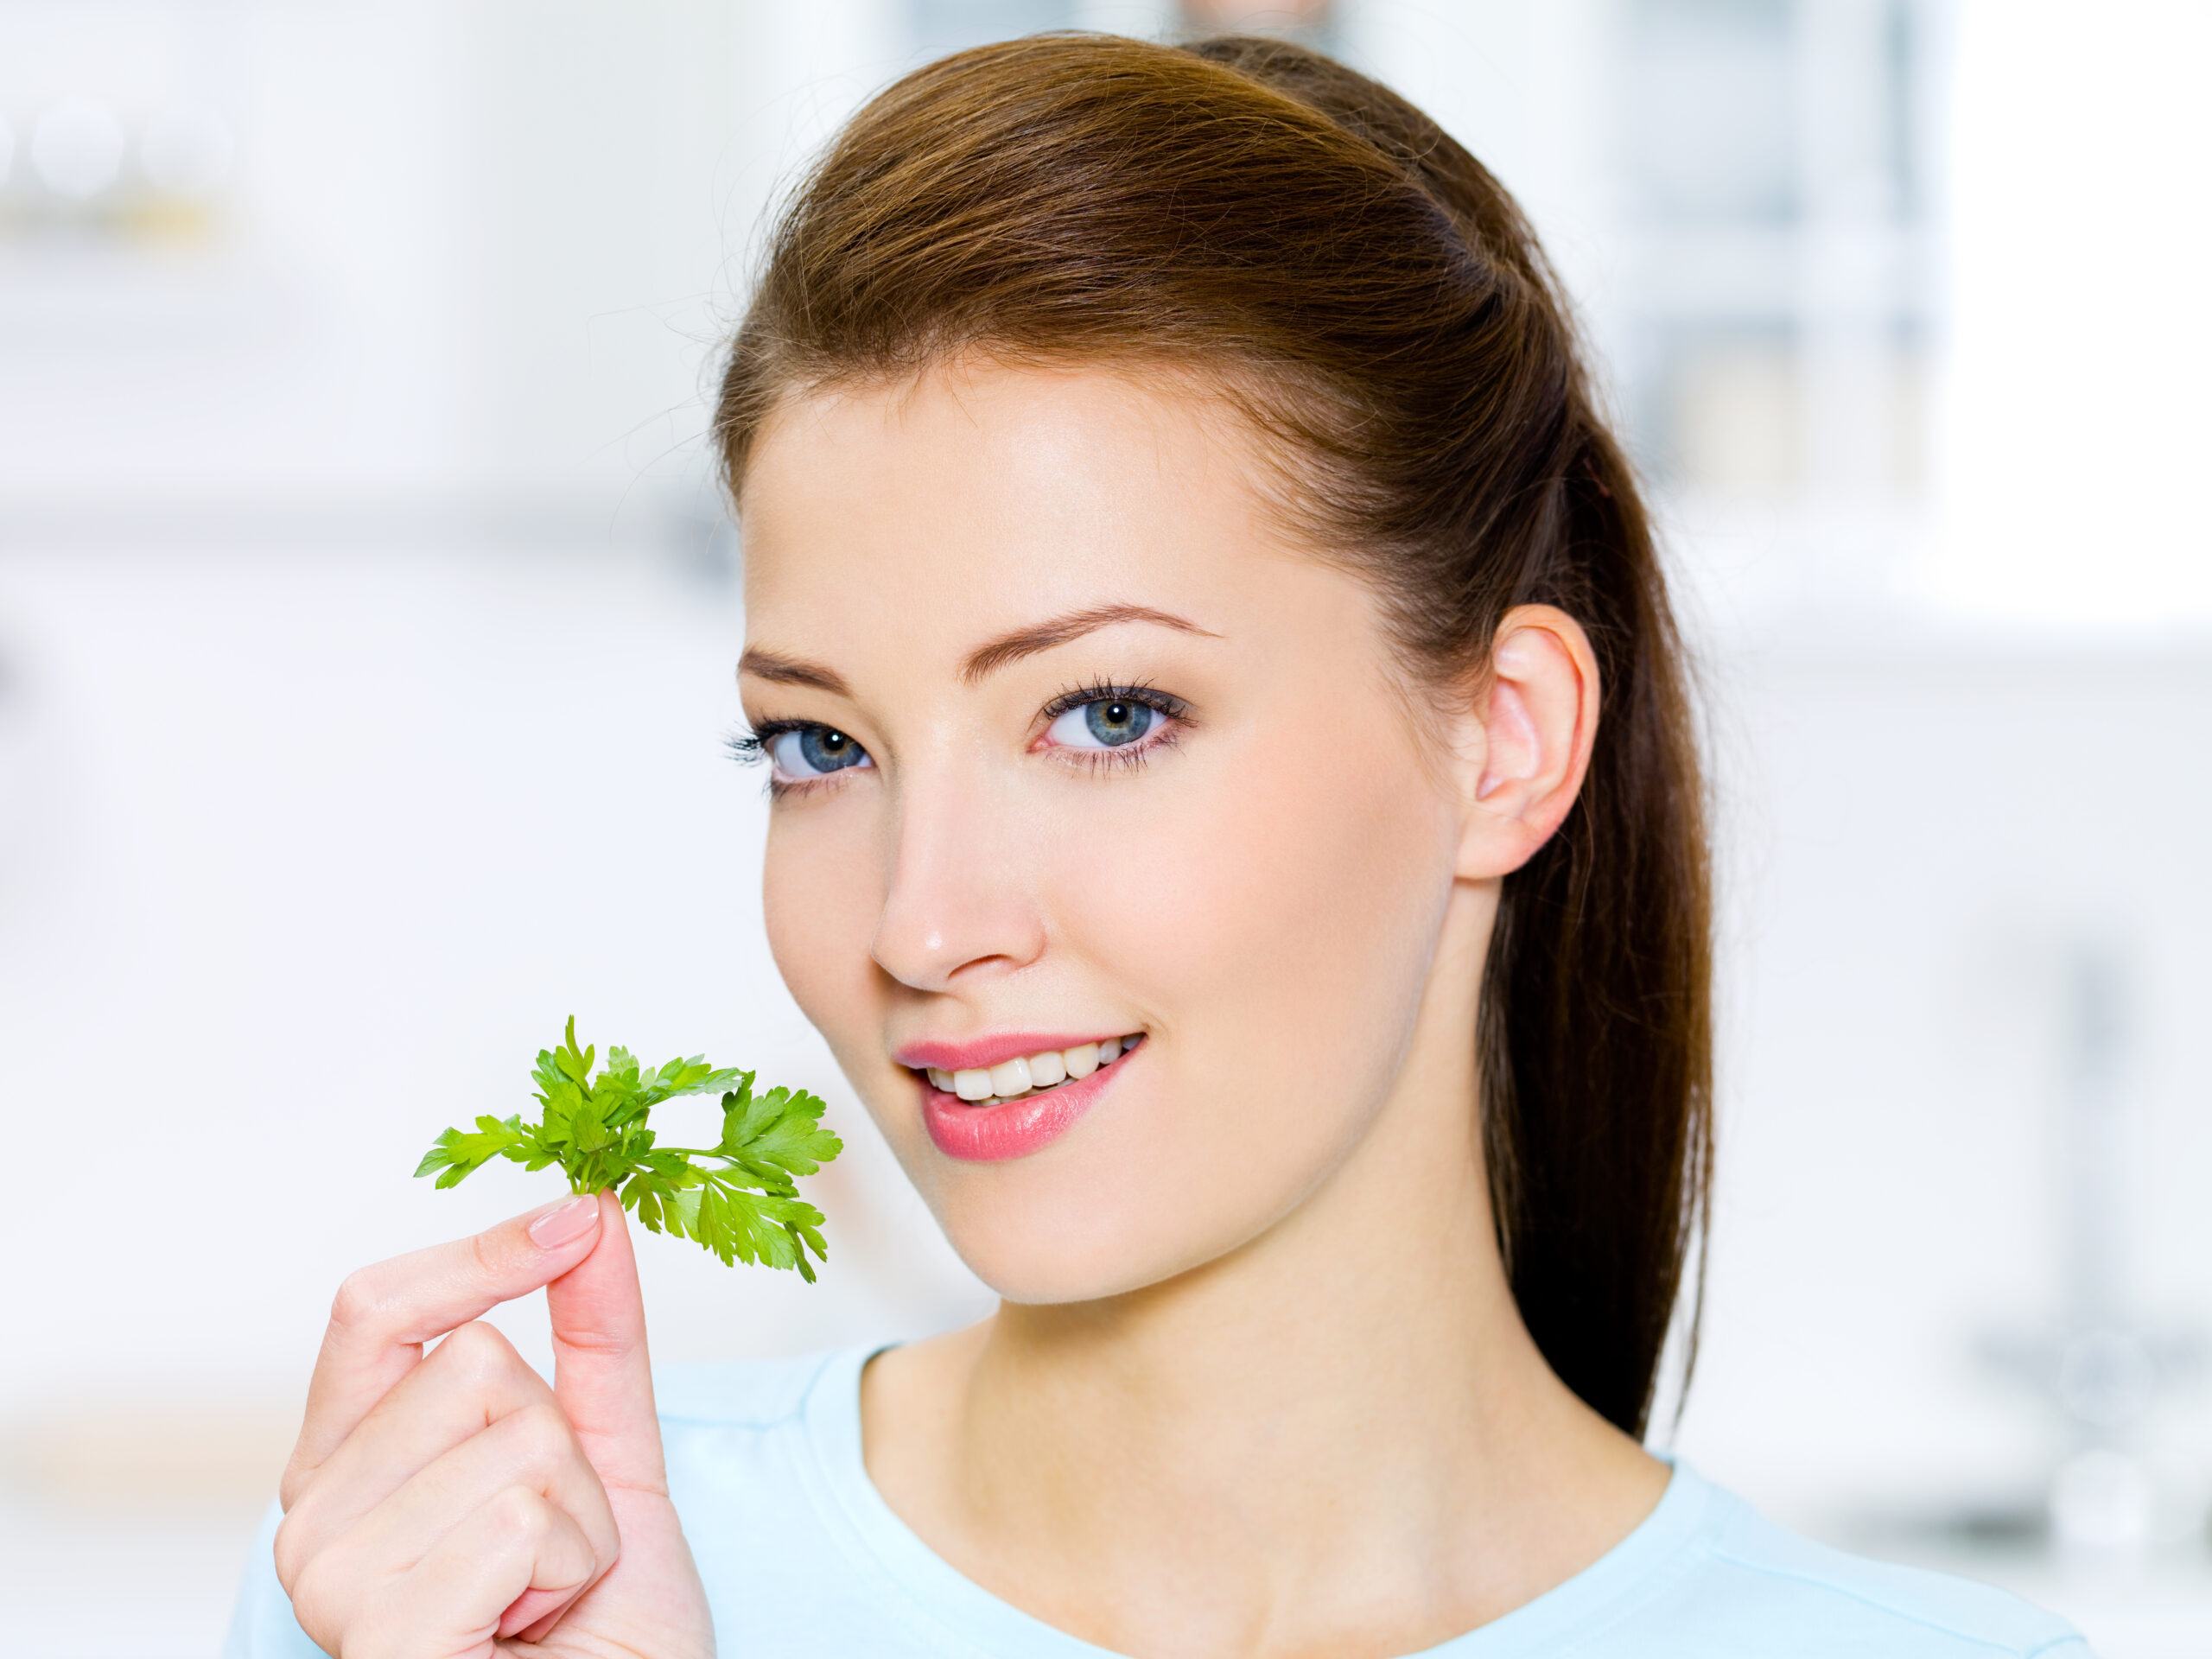 12 Health Benefits of Mint Leaves